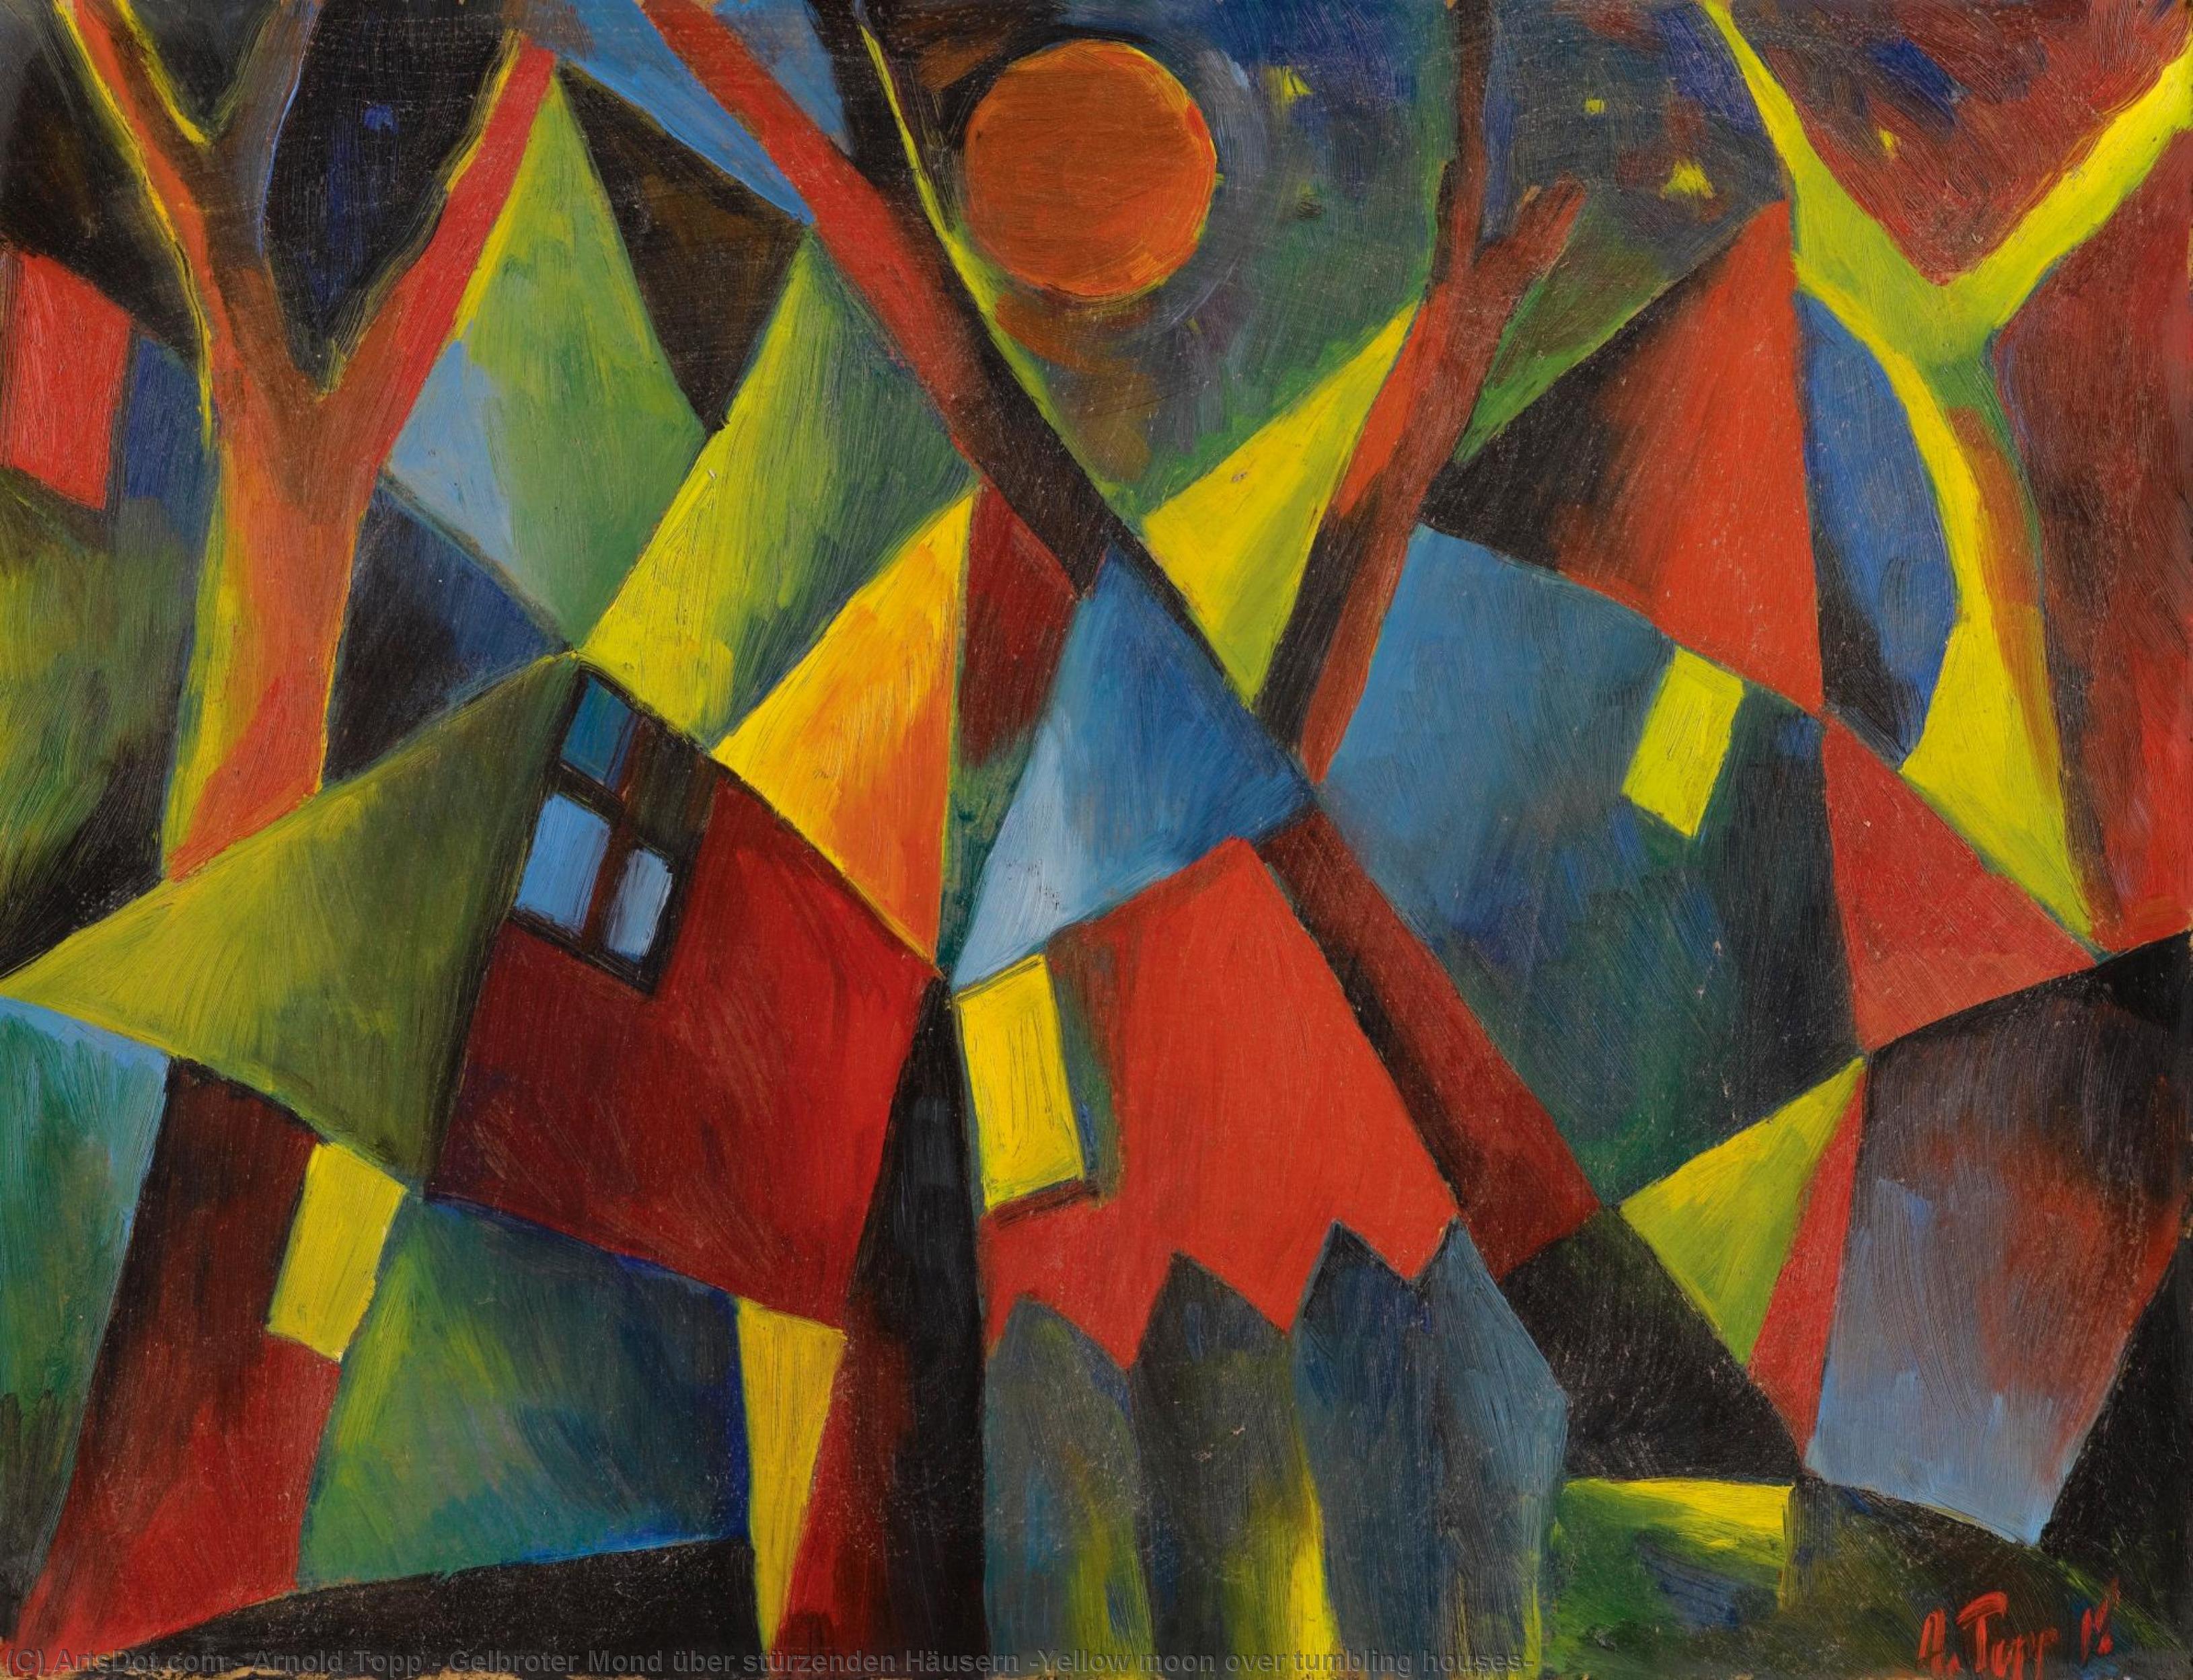 Gelbroter Mond über stürzenden Häusern (Yellow moon over tumbling houses), 1919 by Arnold Topp Arnold Topp | ArtsDot.com